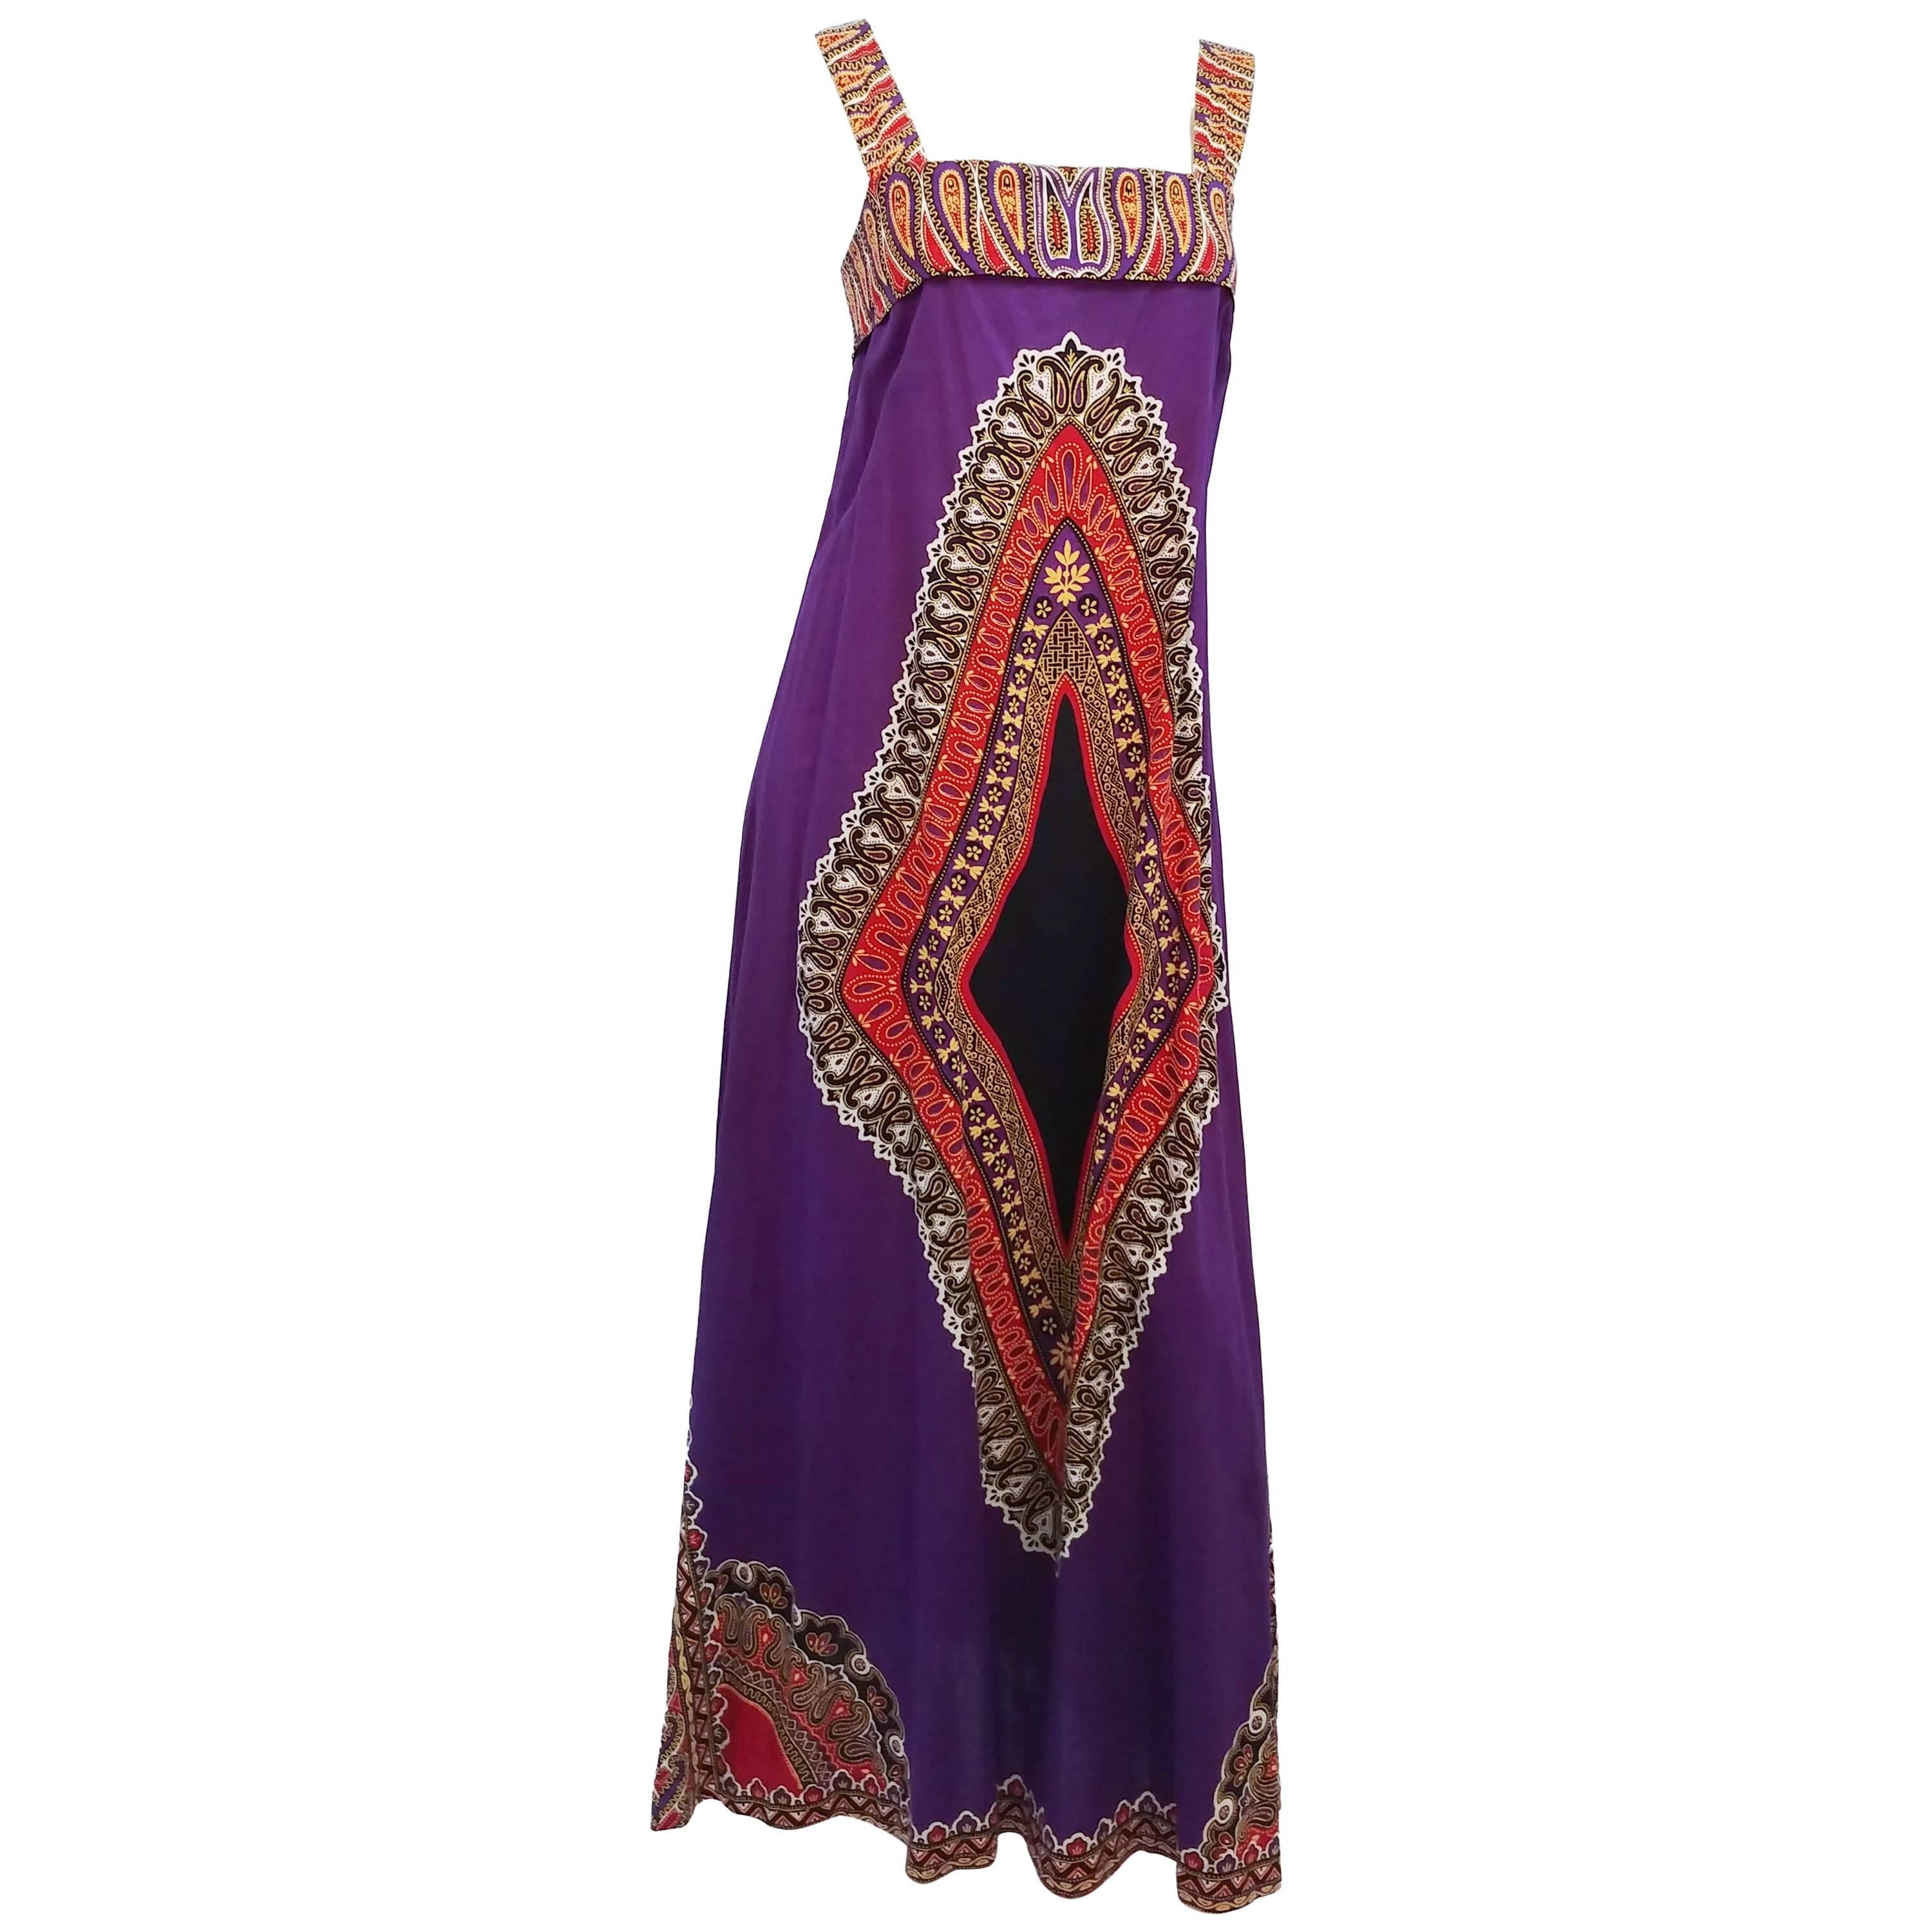 Printed Purple Hippie Maxi Cotton Dress, 1960s